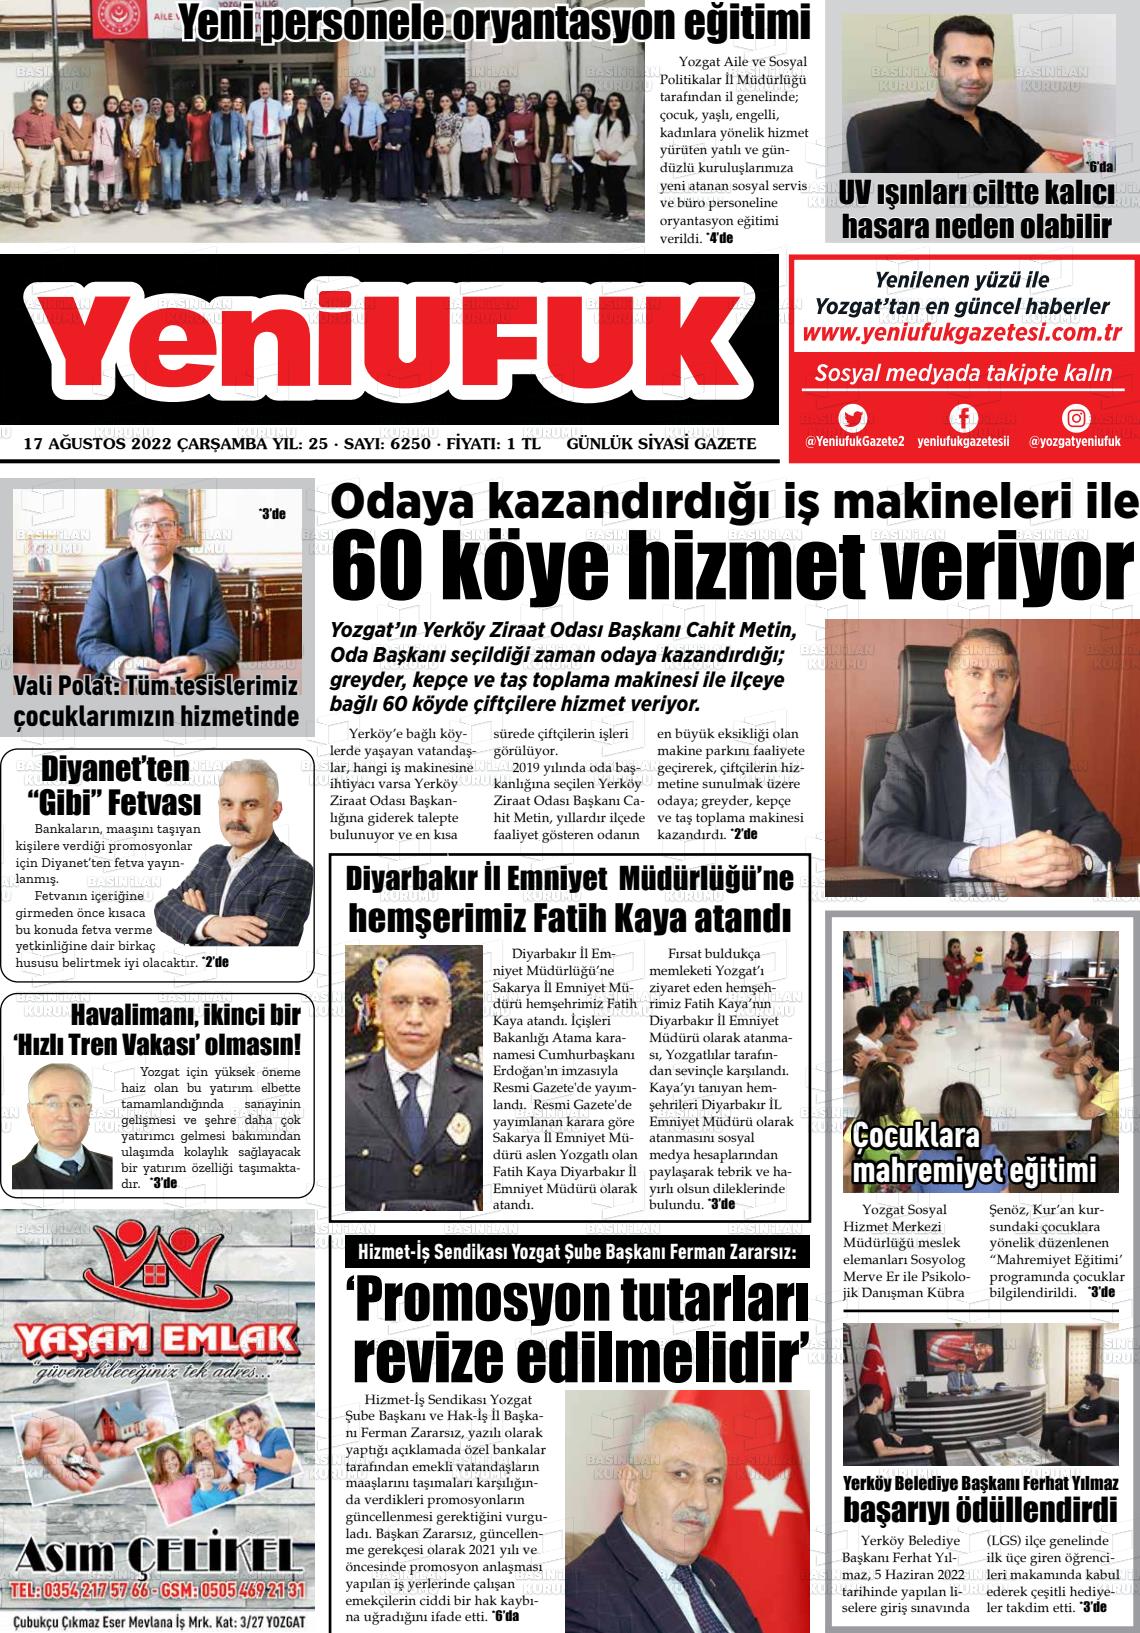 17 Ağustos 2022 Yozgat Yeni Ufuk Gazete Manşeti